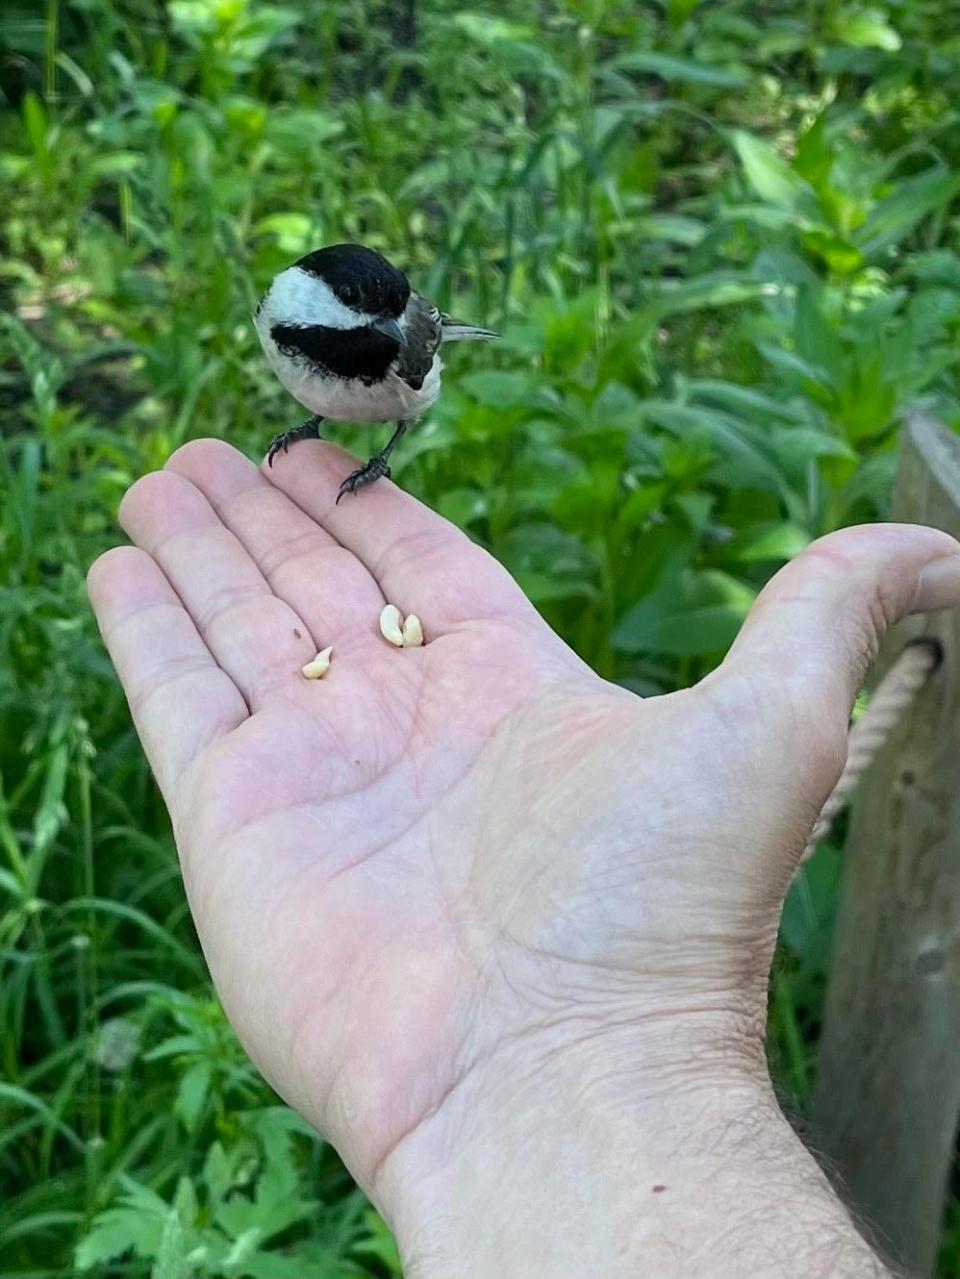 A chickadee feeds on the writer's hand